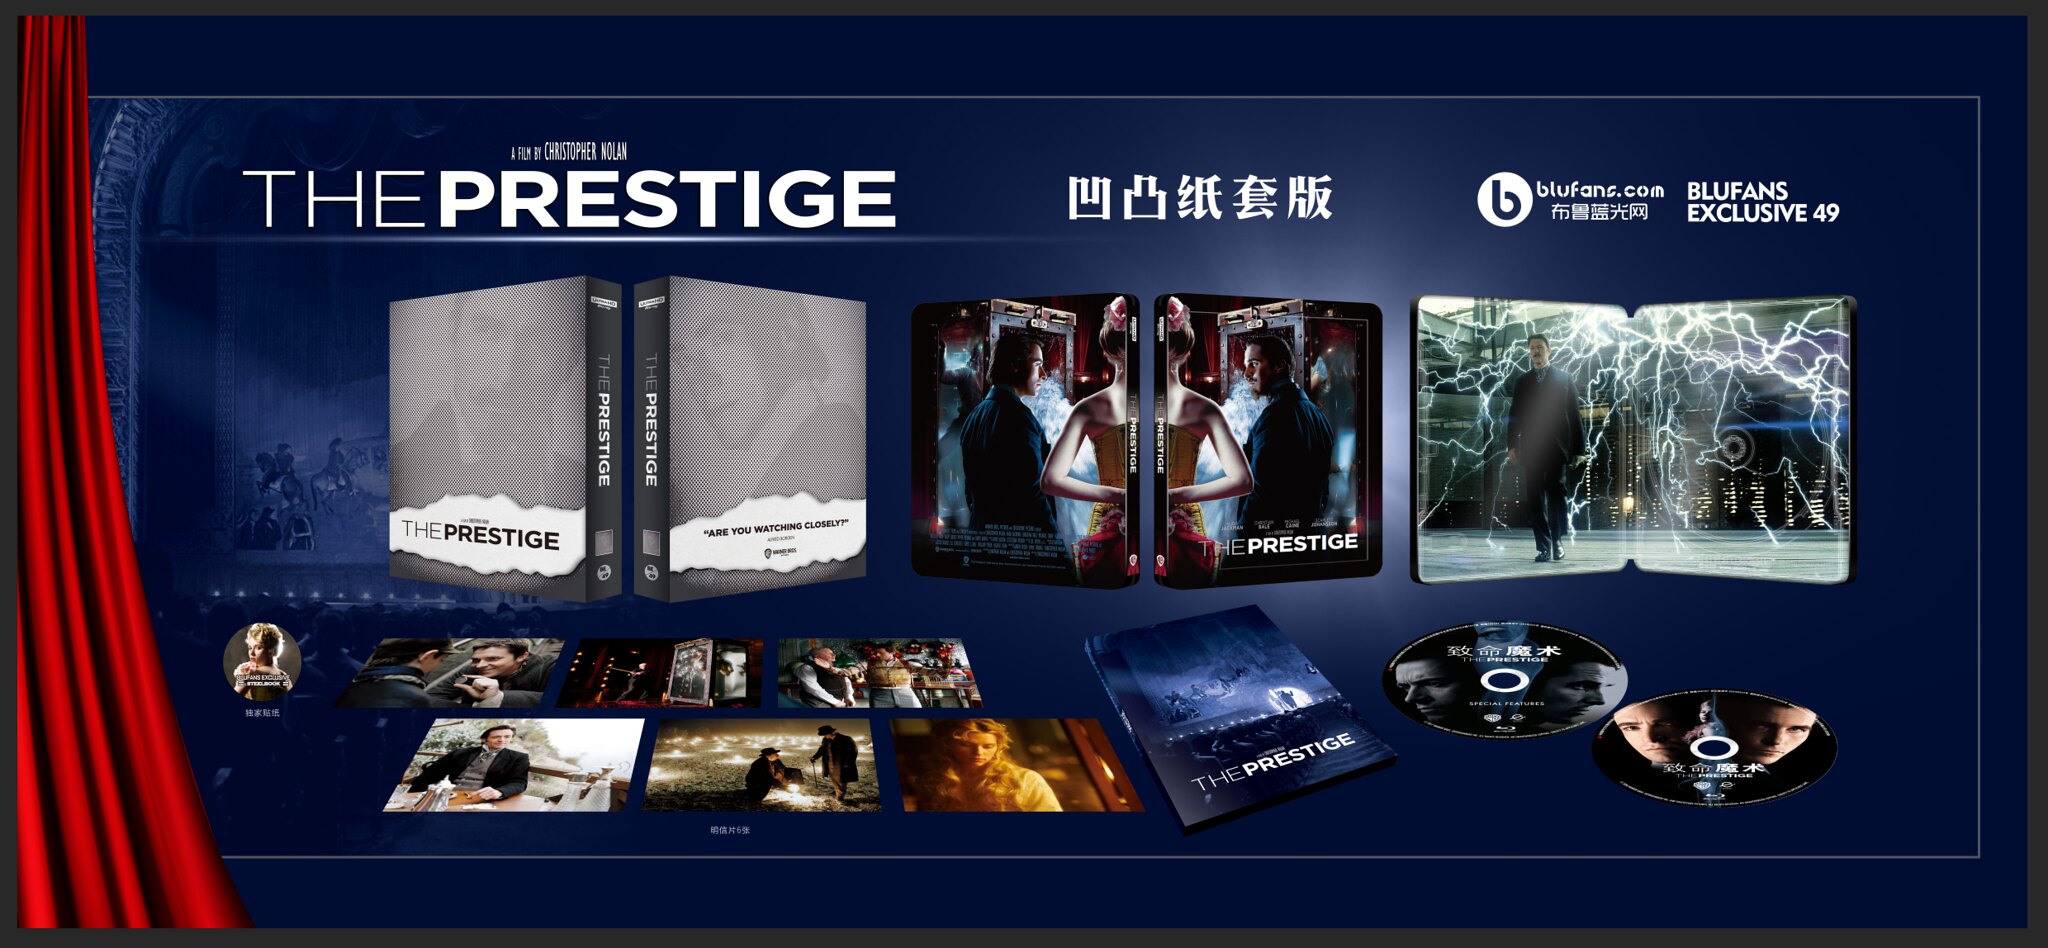 The Prestige Full Slip SteelBook (Blufans #49)(China) – Blurays